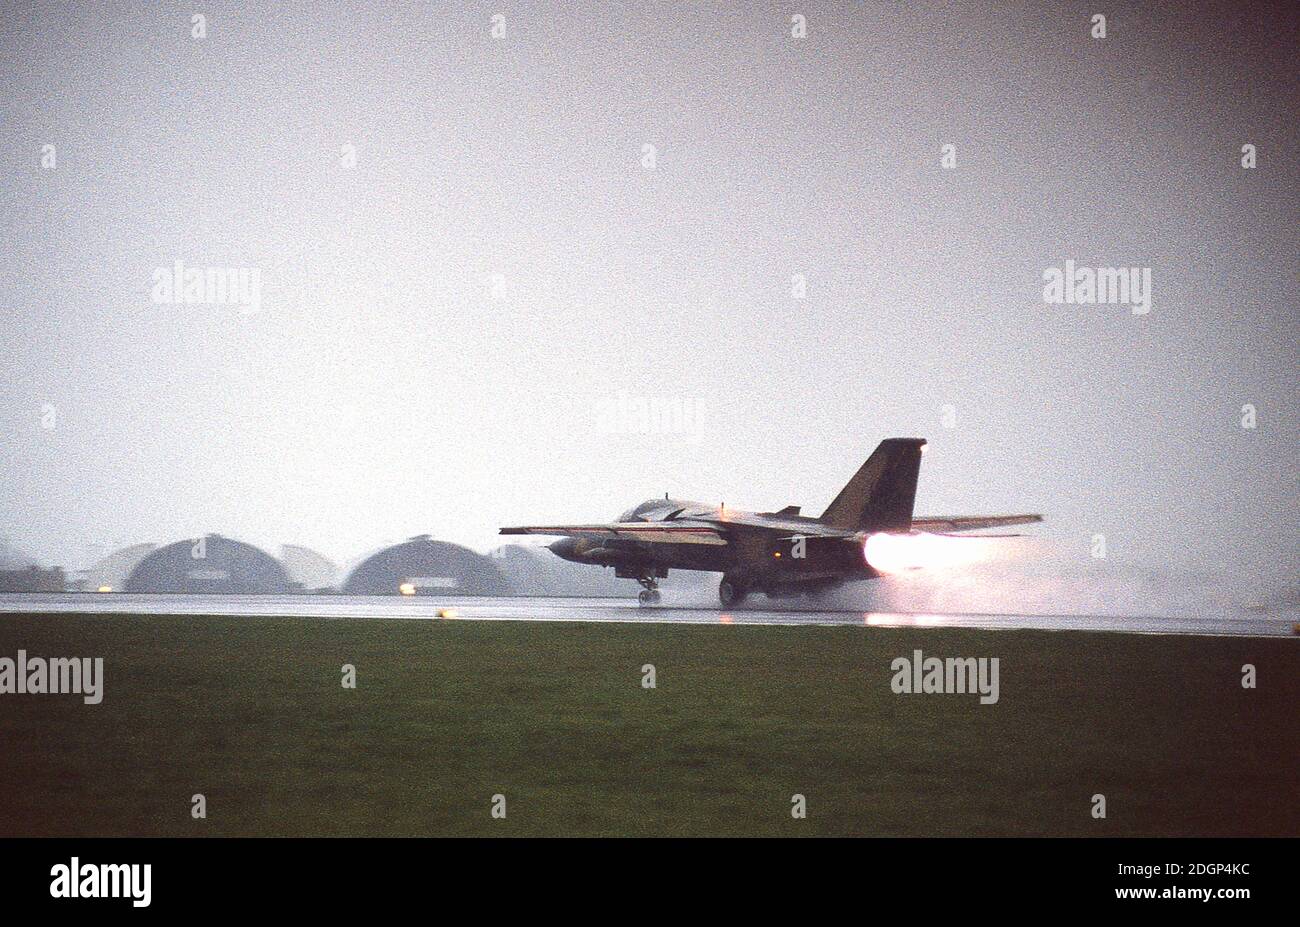 Base aerea RAF Upper Heyford Oxfordshire UK 1990. Sede del 20° USAF Tactical Fighter Wing. Volo F111 Aardvark. Atterraggio sulla pista bagnata Foto Stock